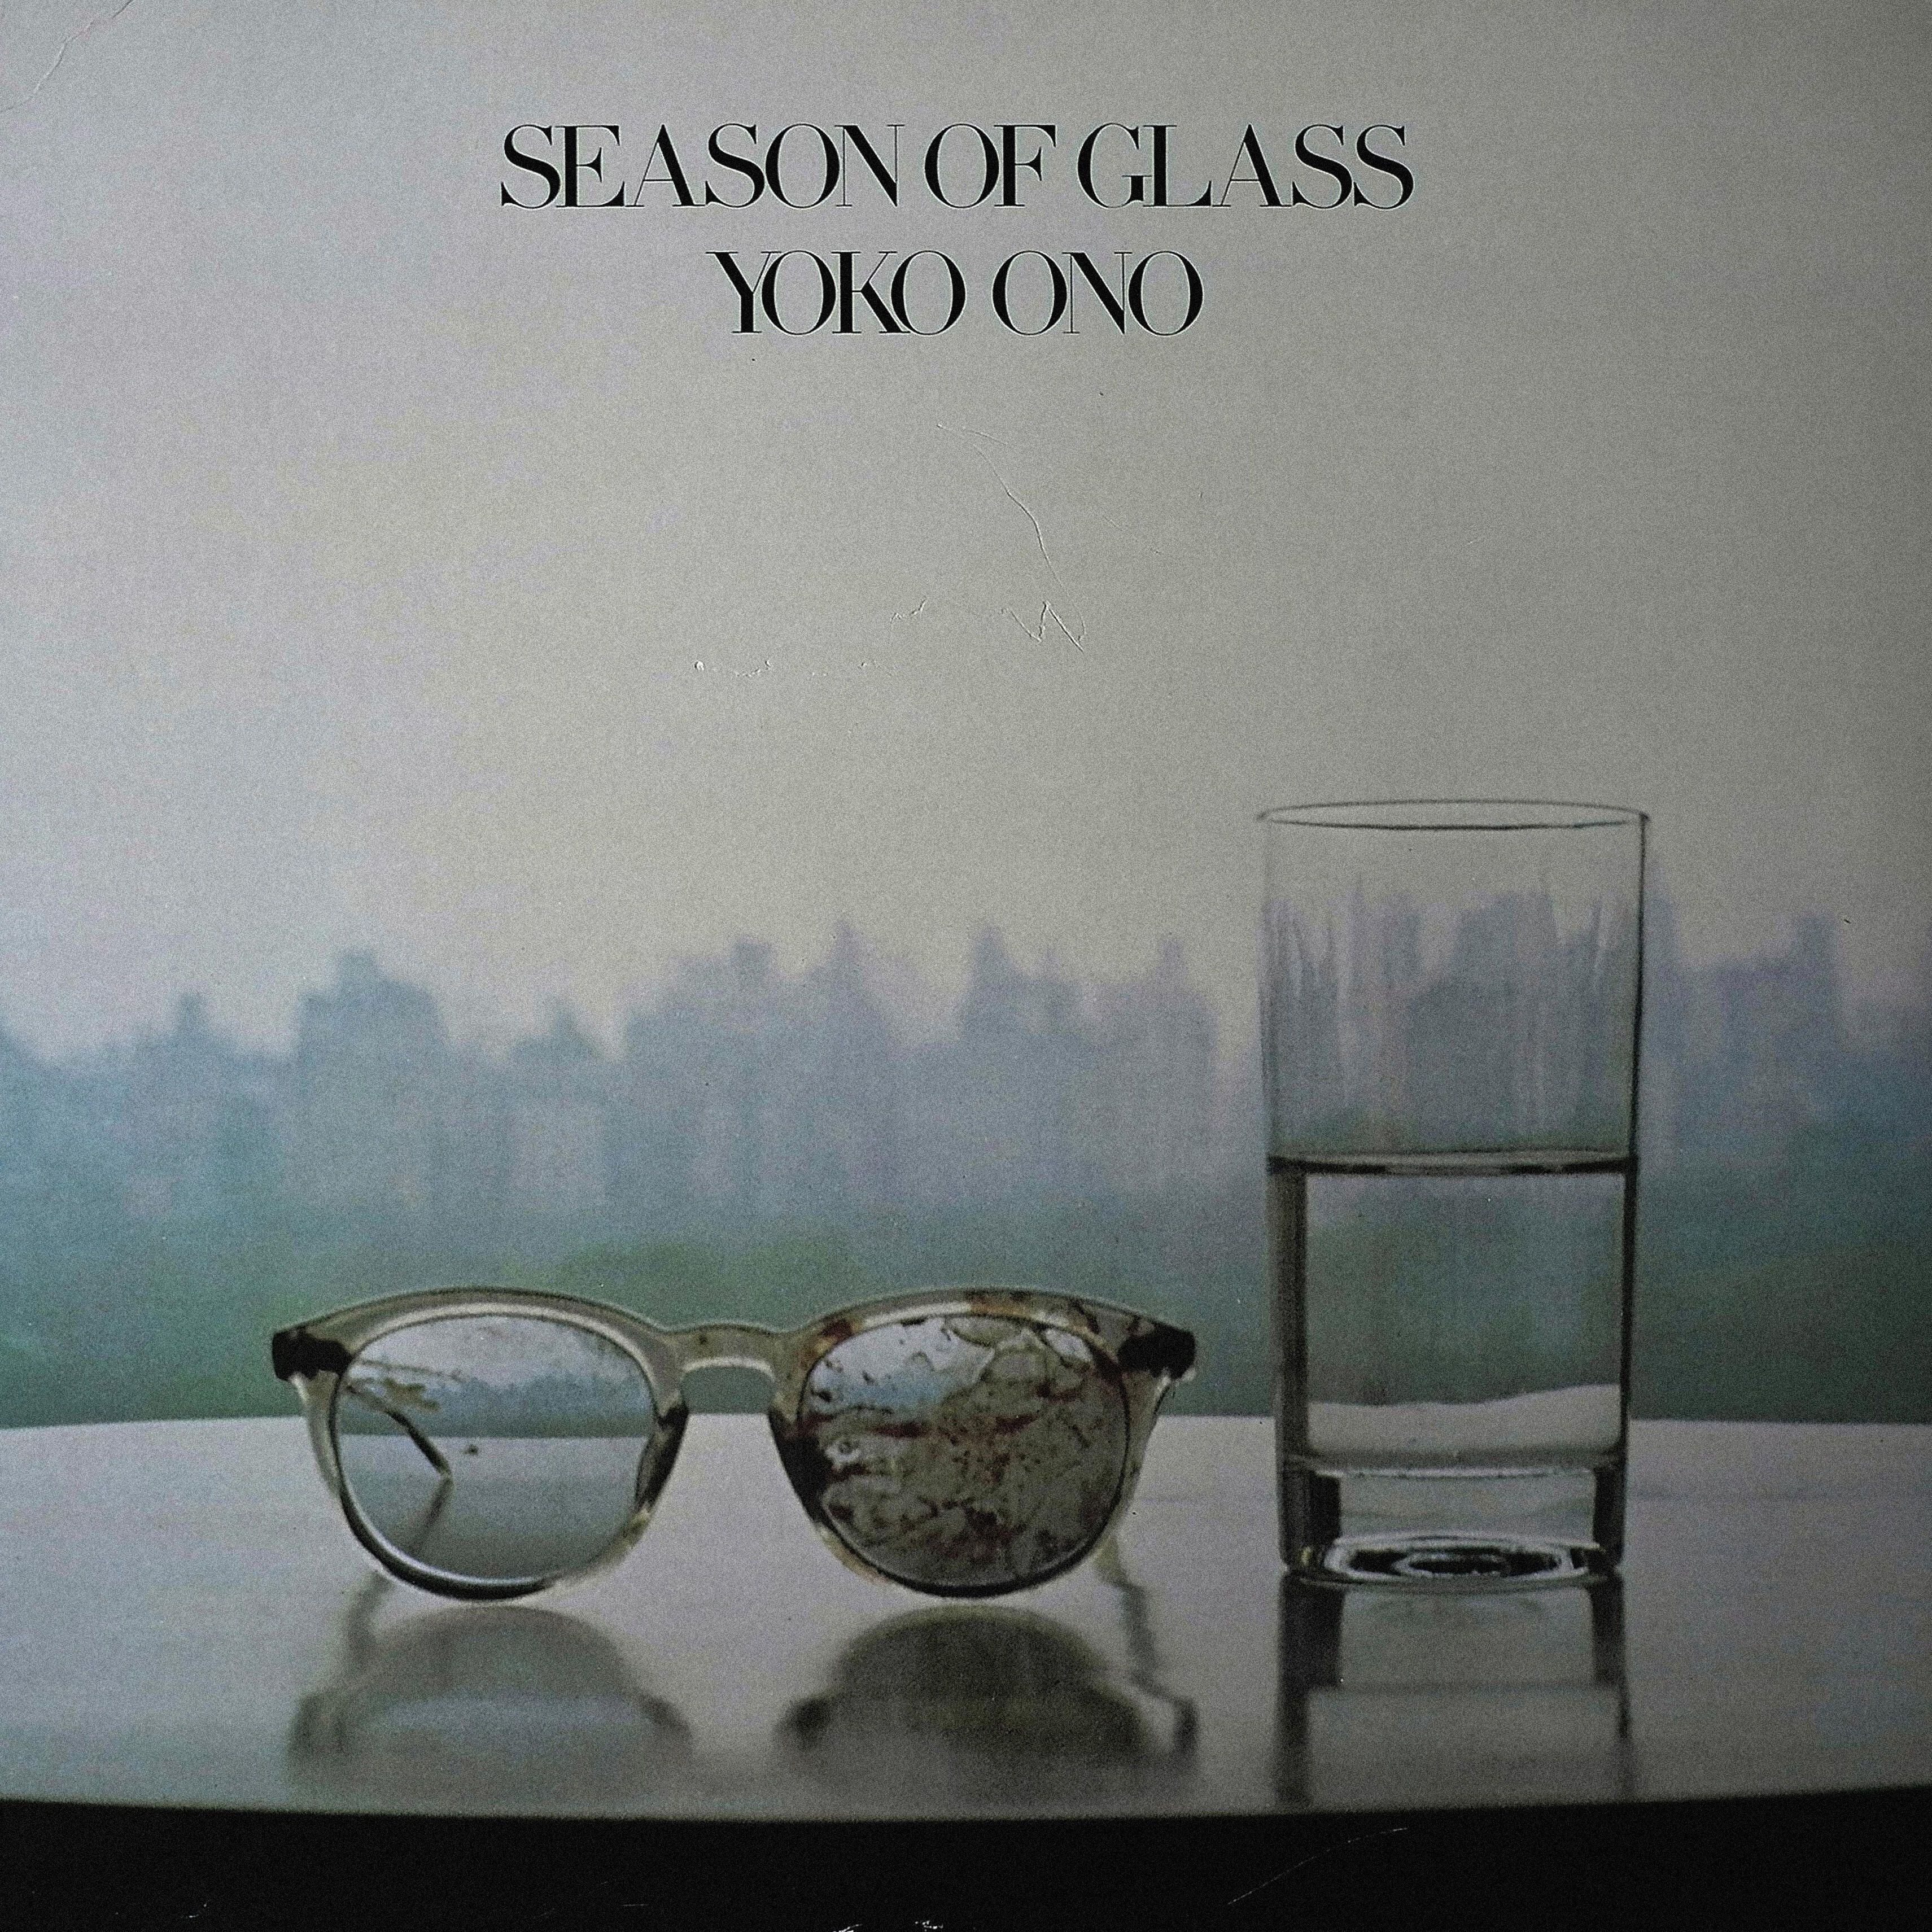 Yoko Ono   -  Season Of Glass  -  Vintage vinyl album cover